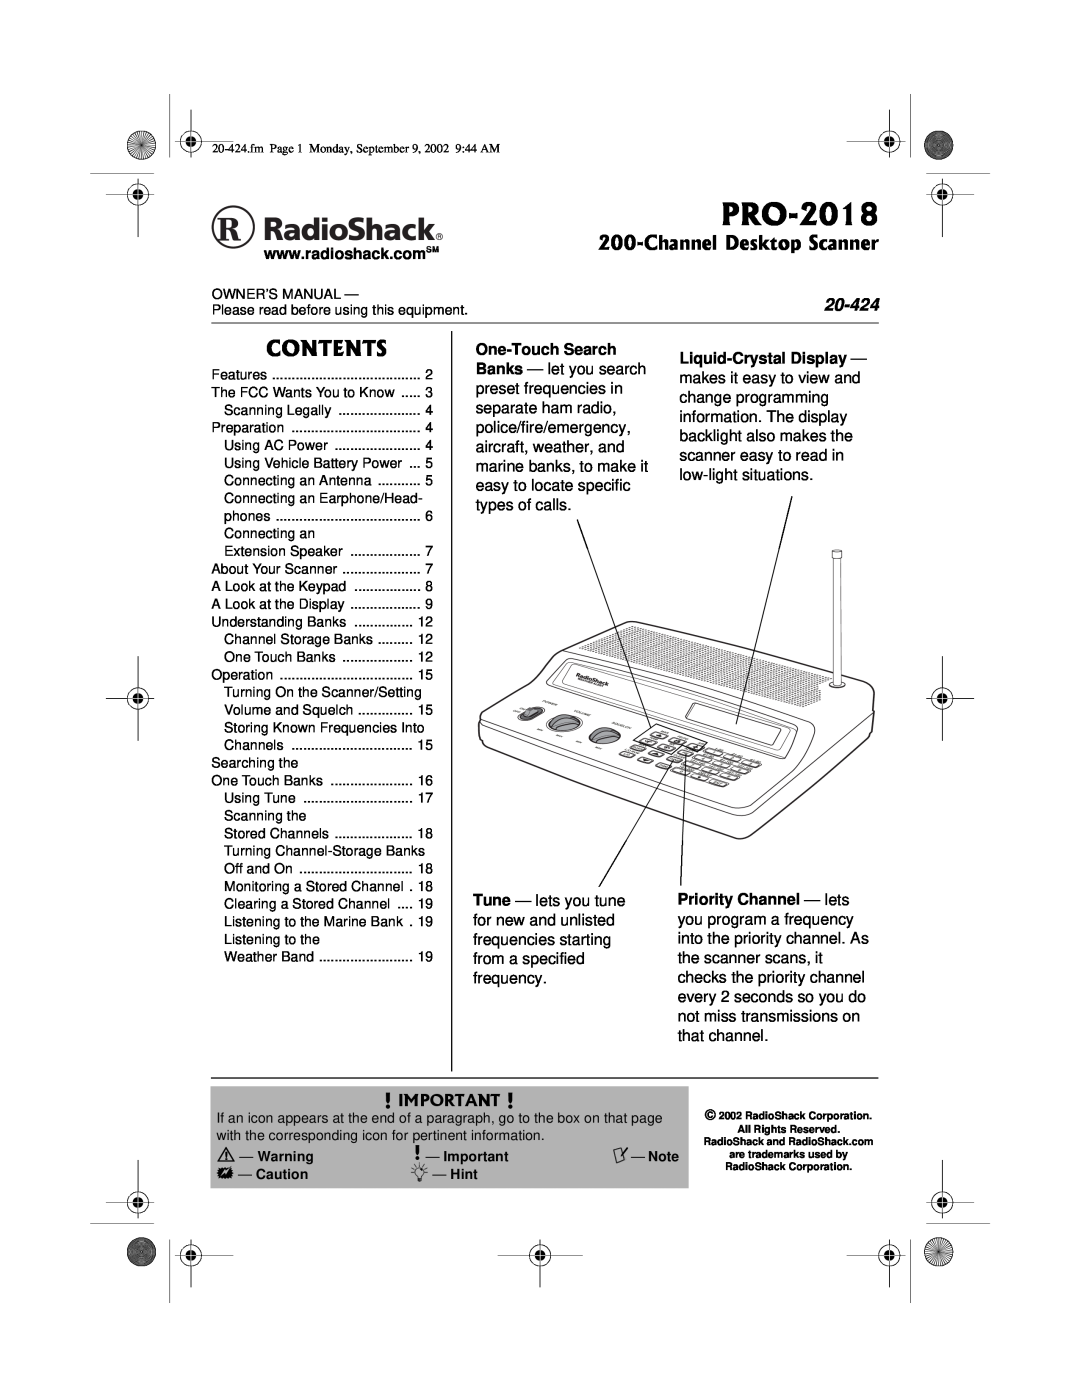 Radio Shack PRO-2018 manual 106065, 241/423, 20-424 